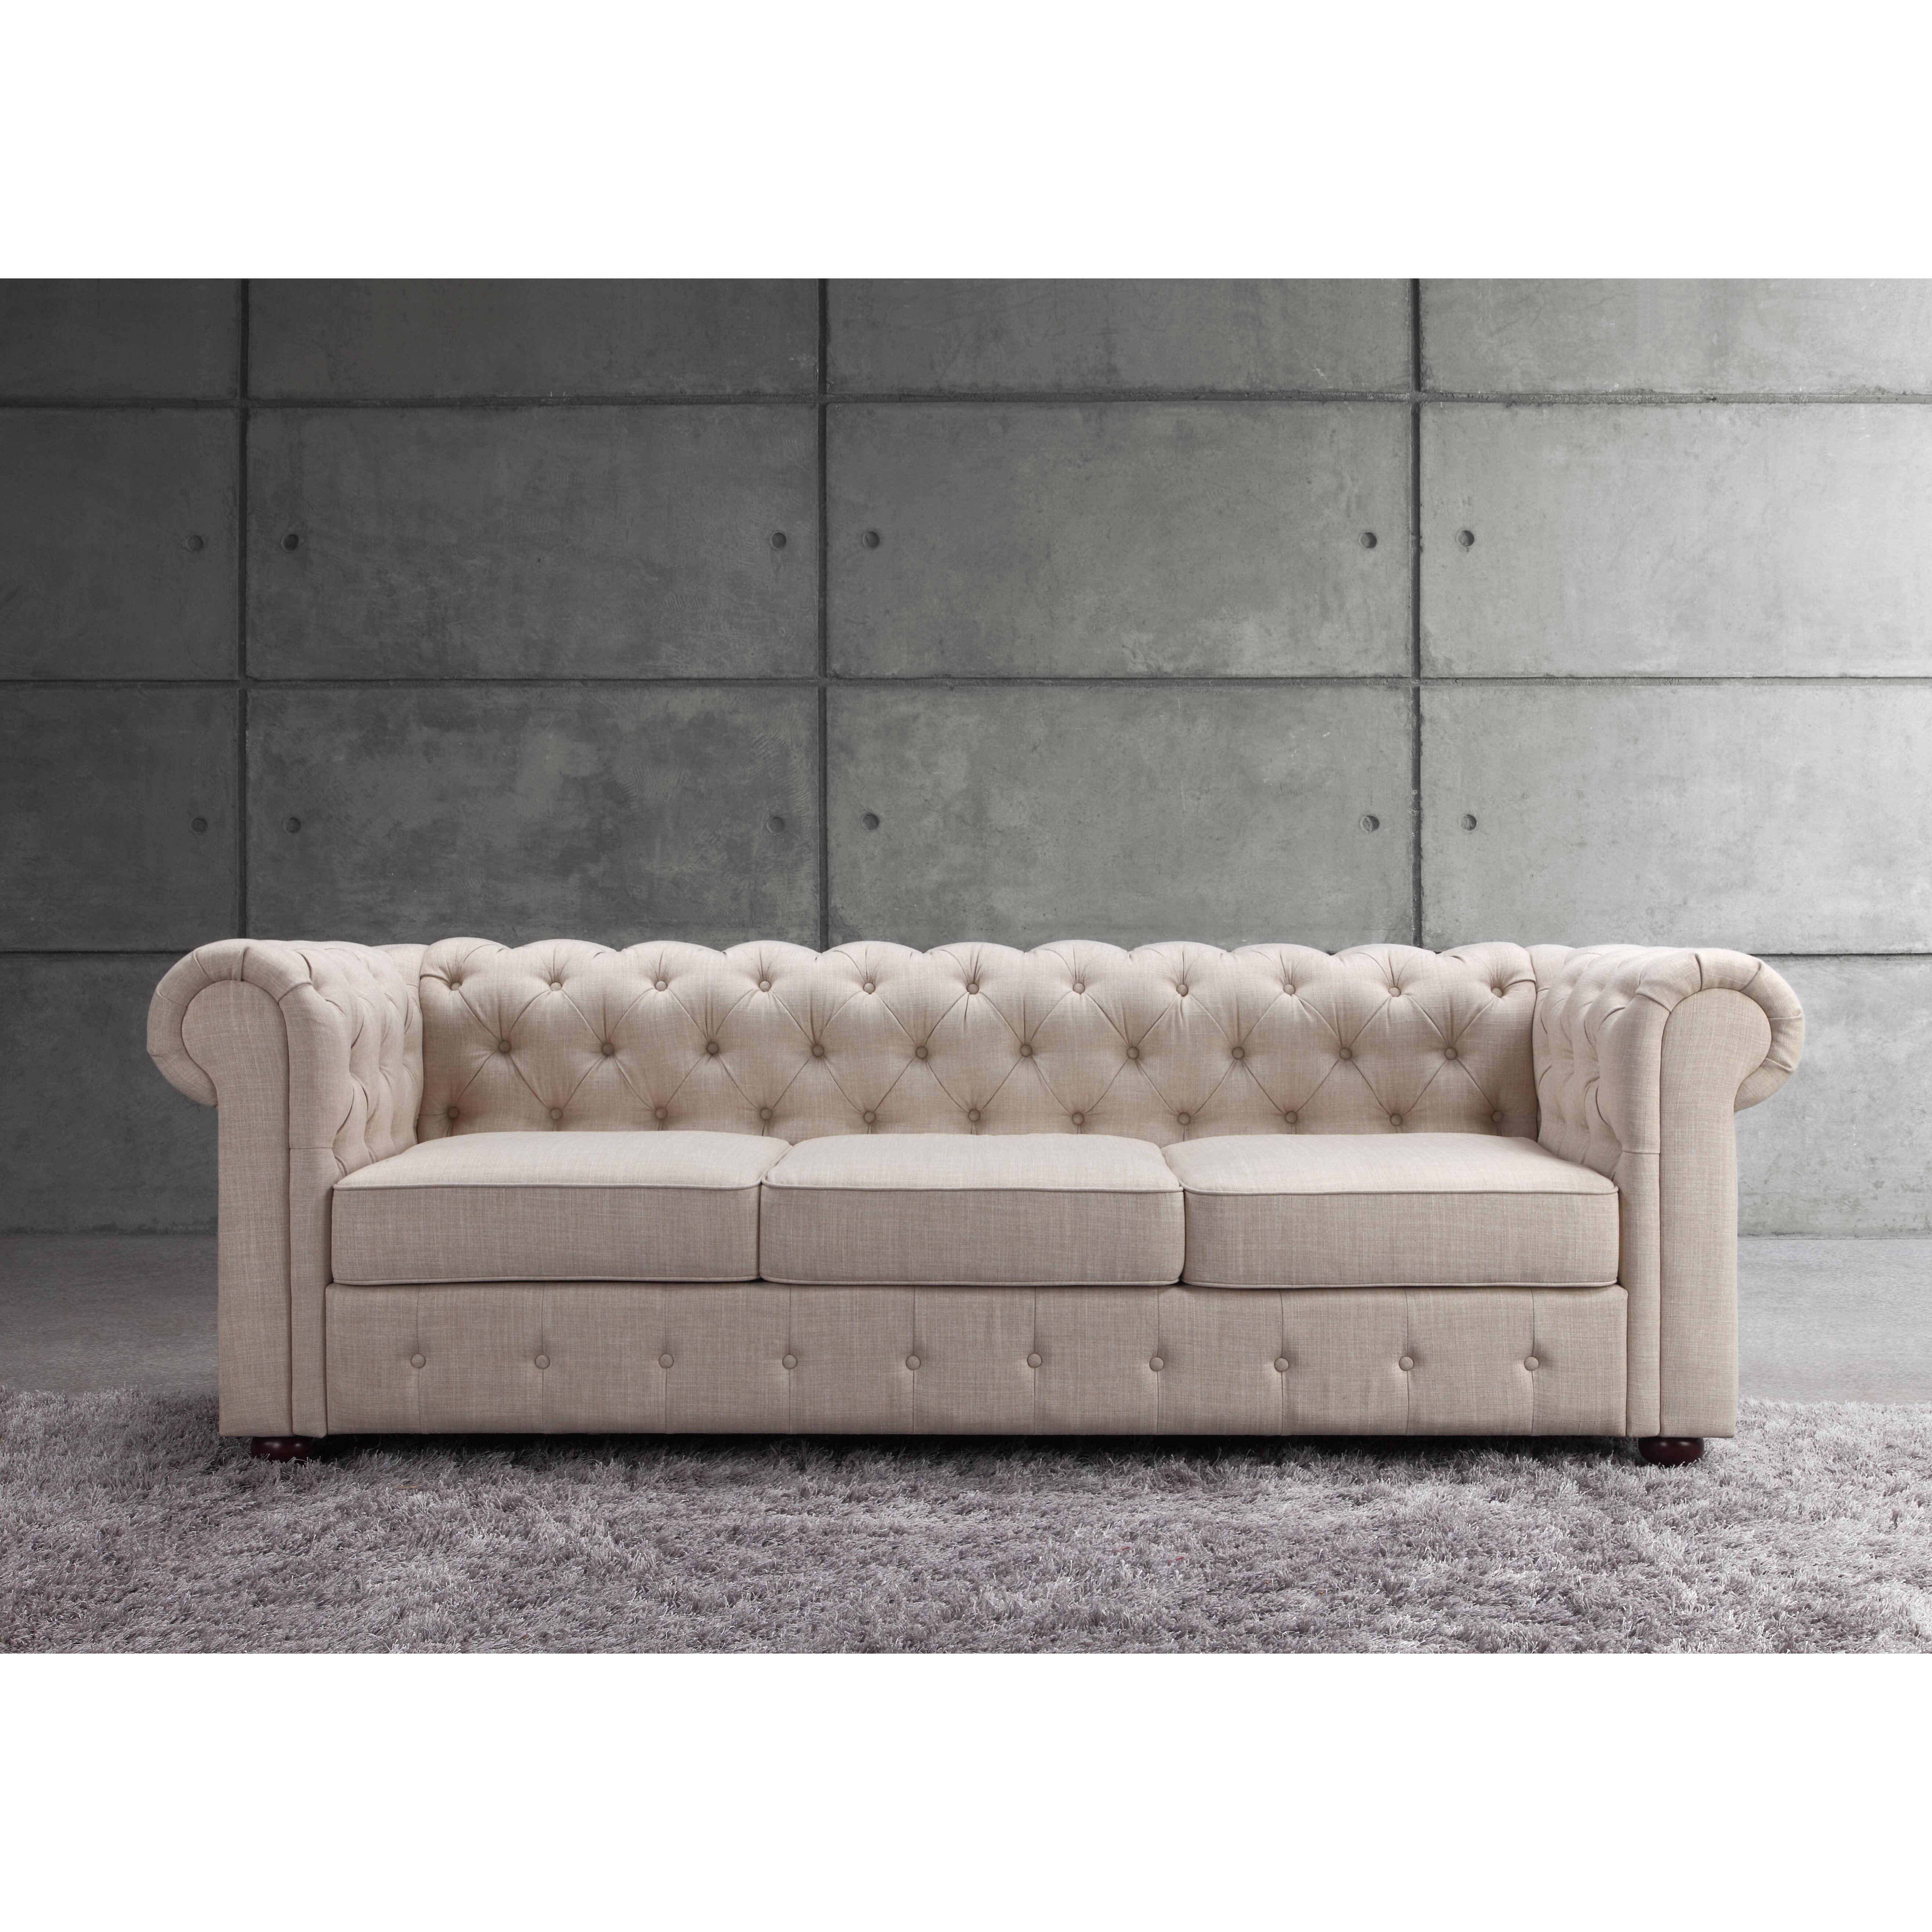 Mulhouse Furniture Garcia Sofa Reviews Wayfair